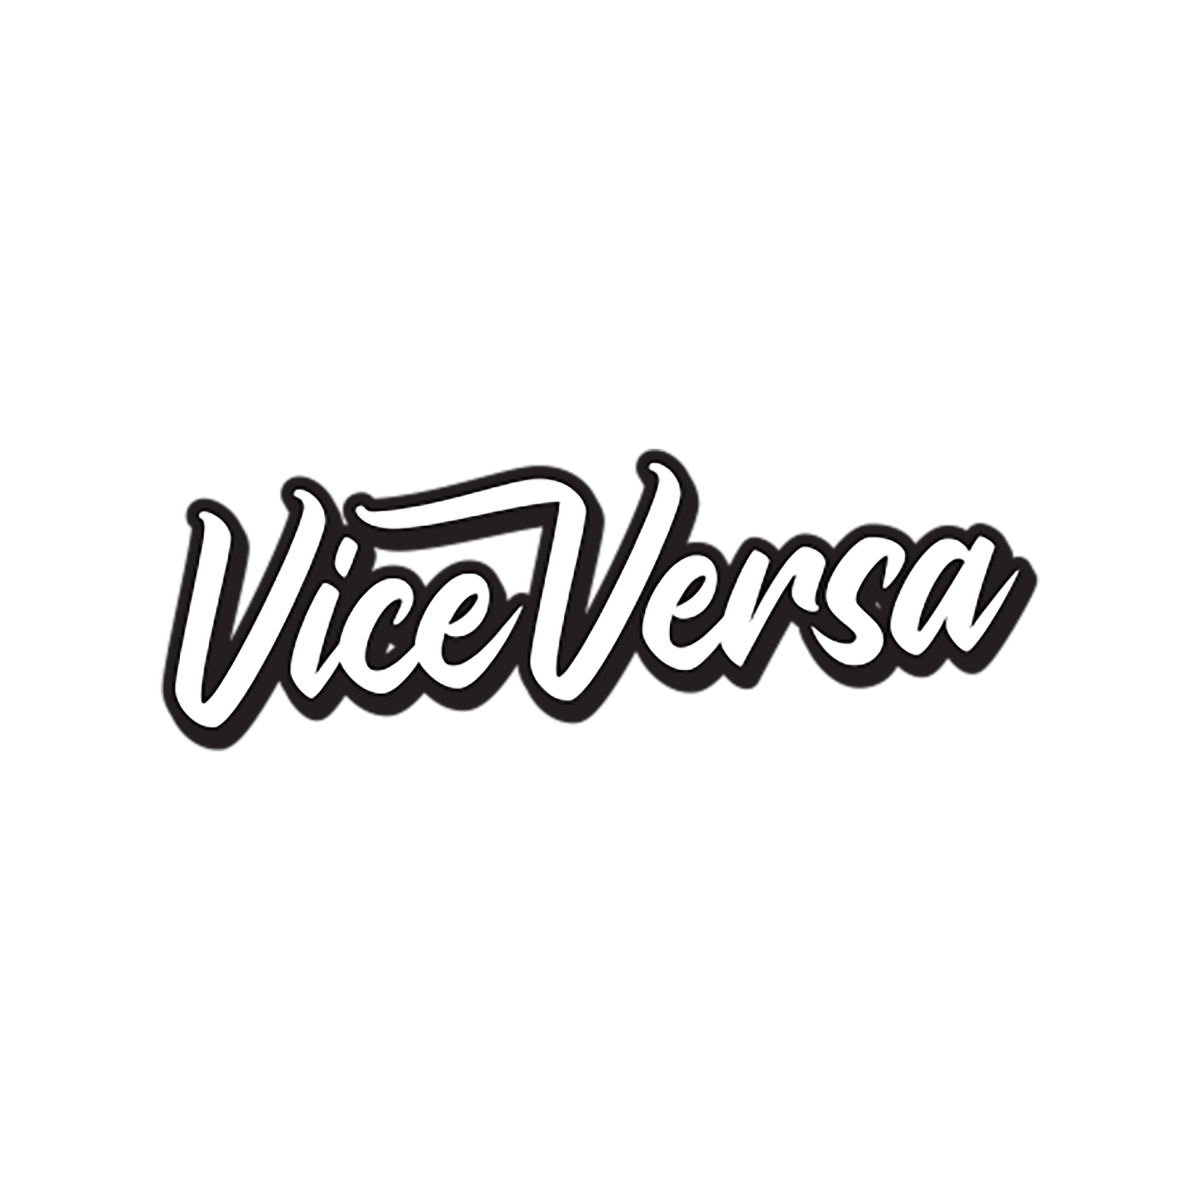 Vice Versa - MJ Fitness